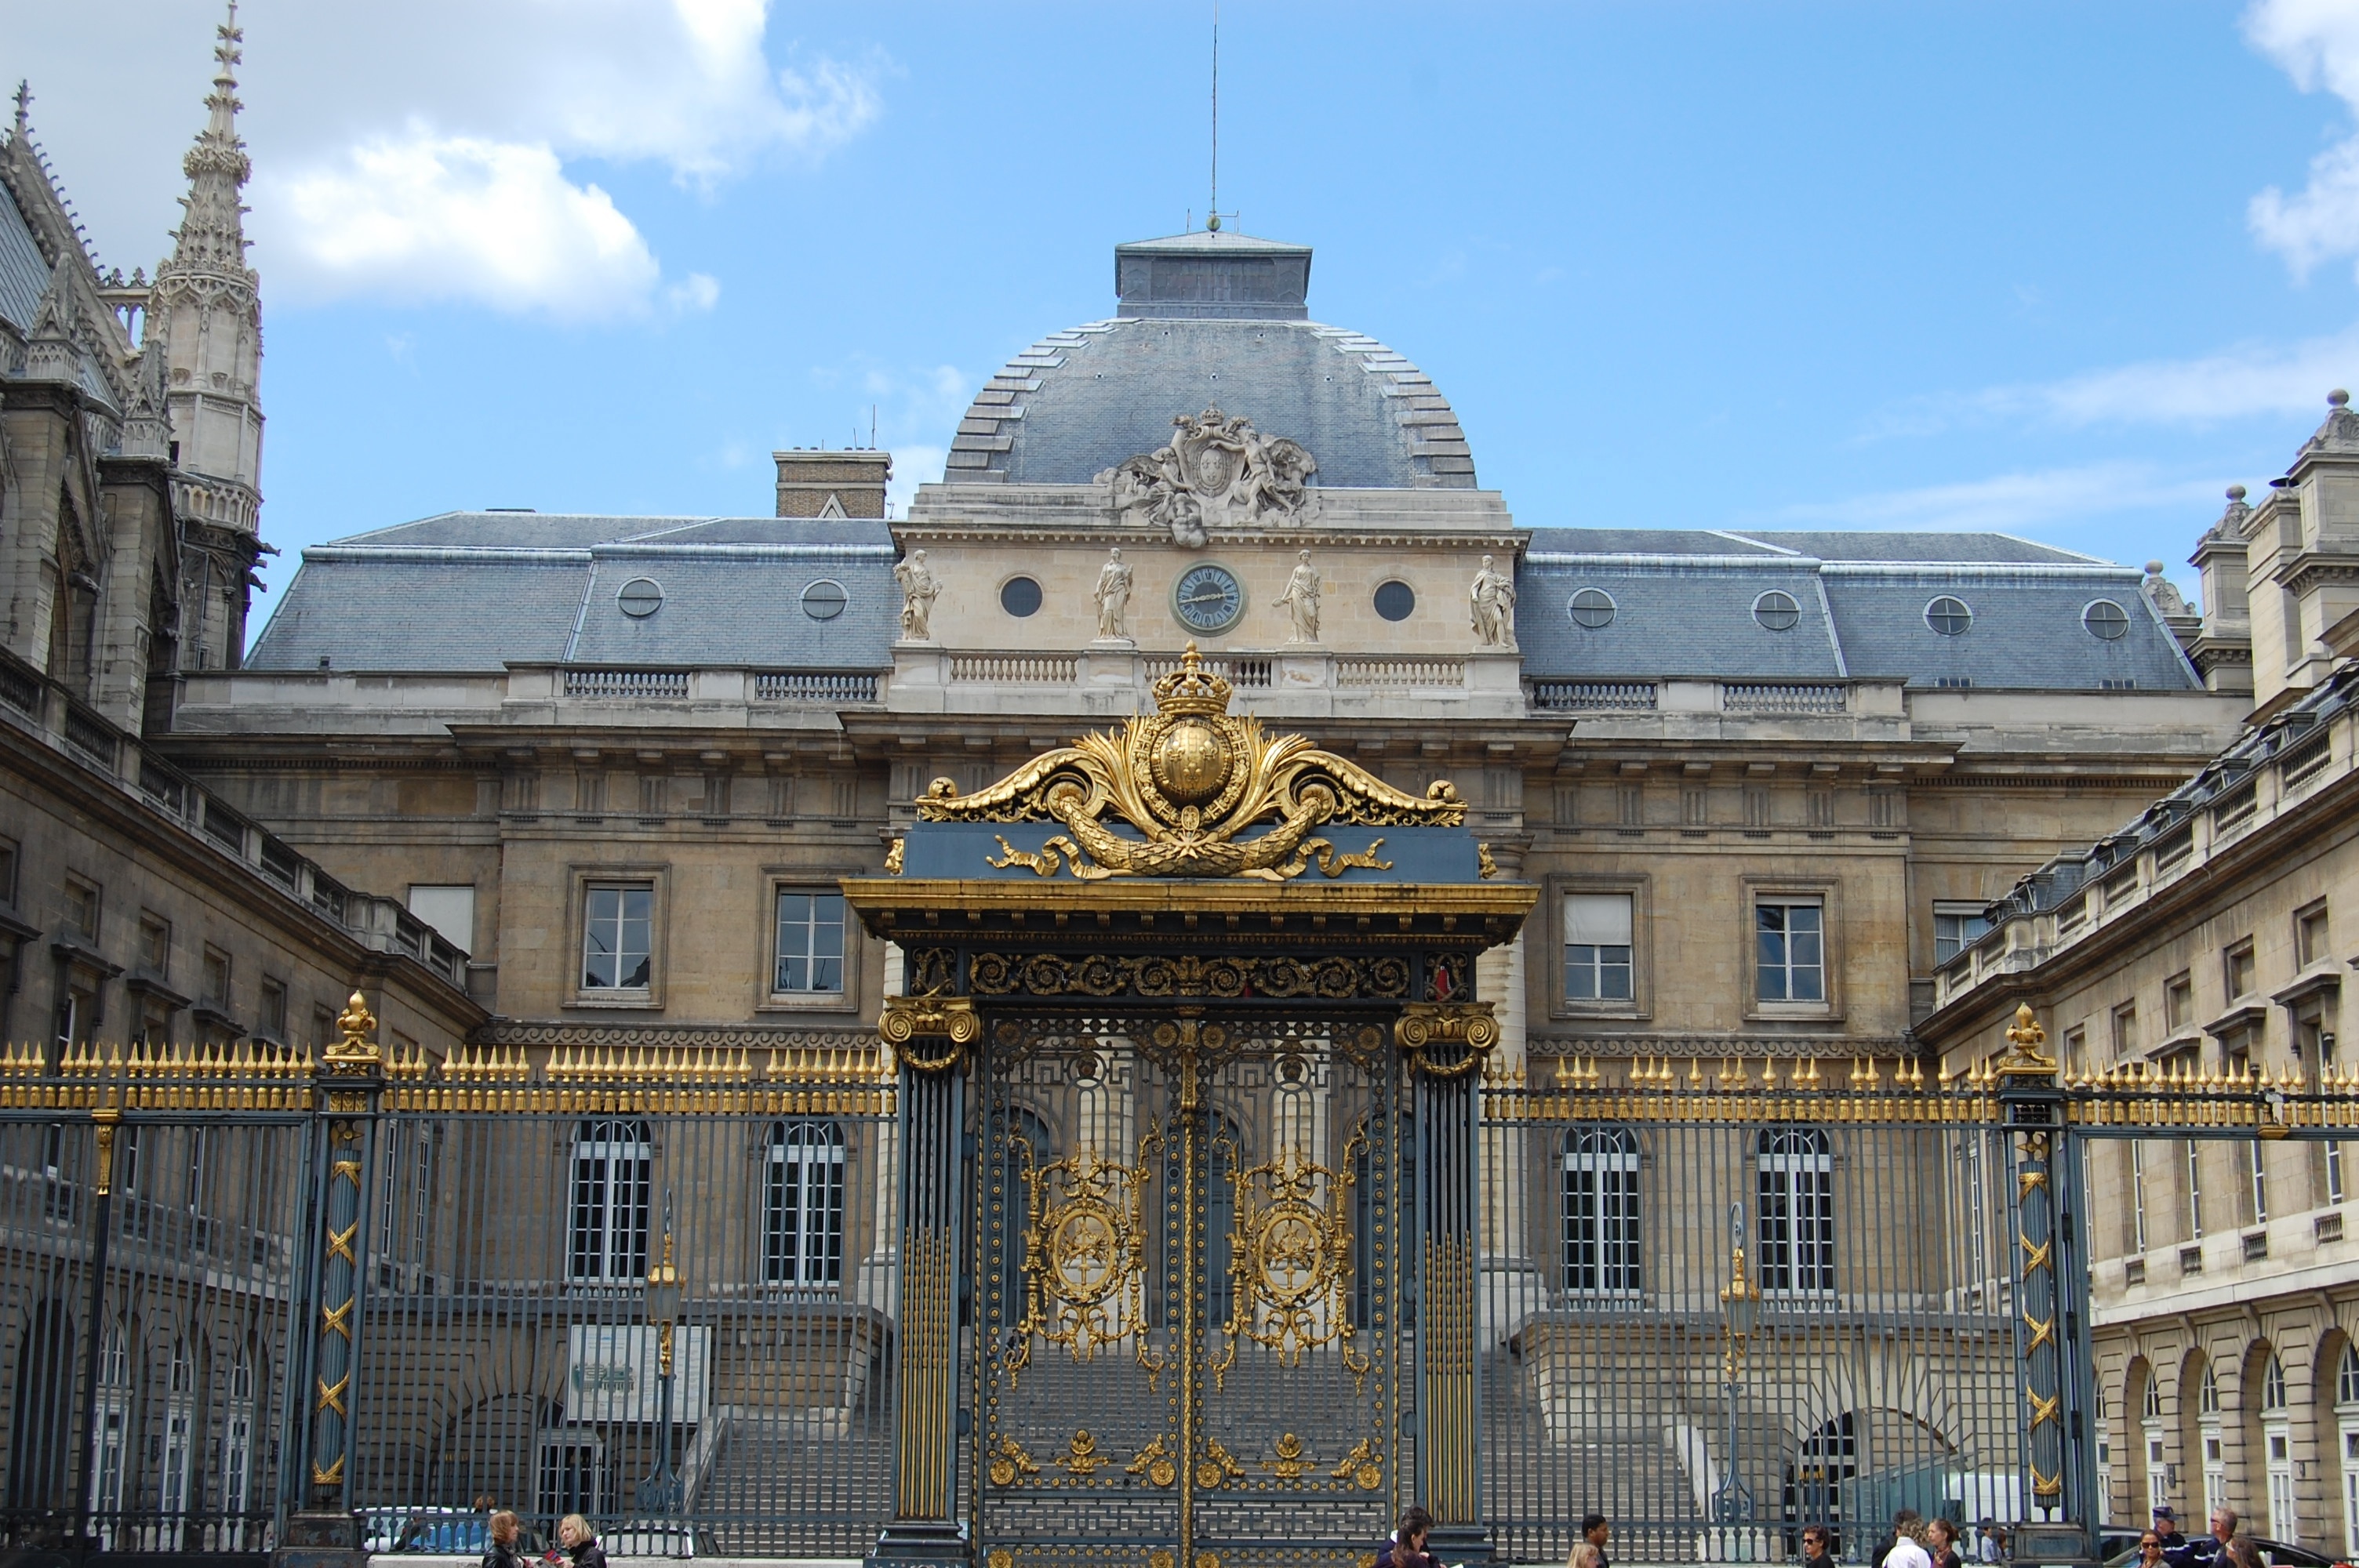 The Palais de Justice in Paris, with gates of the cour d'honneur in front.